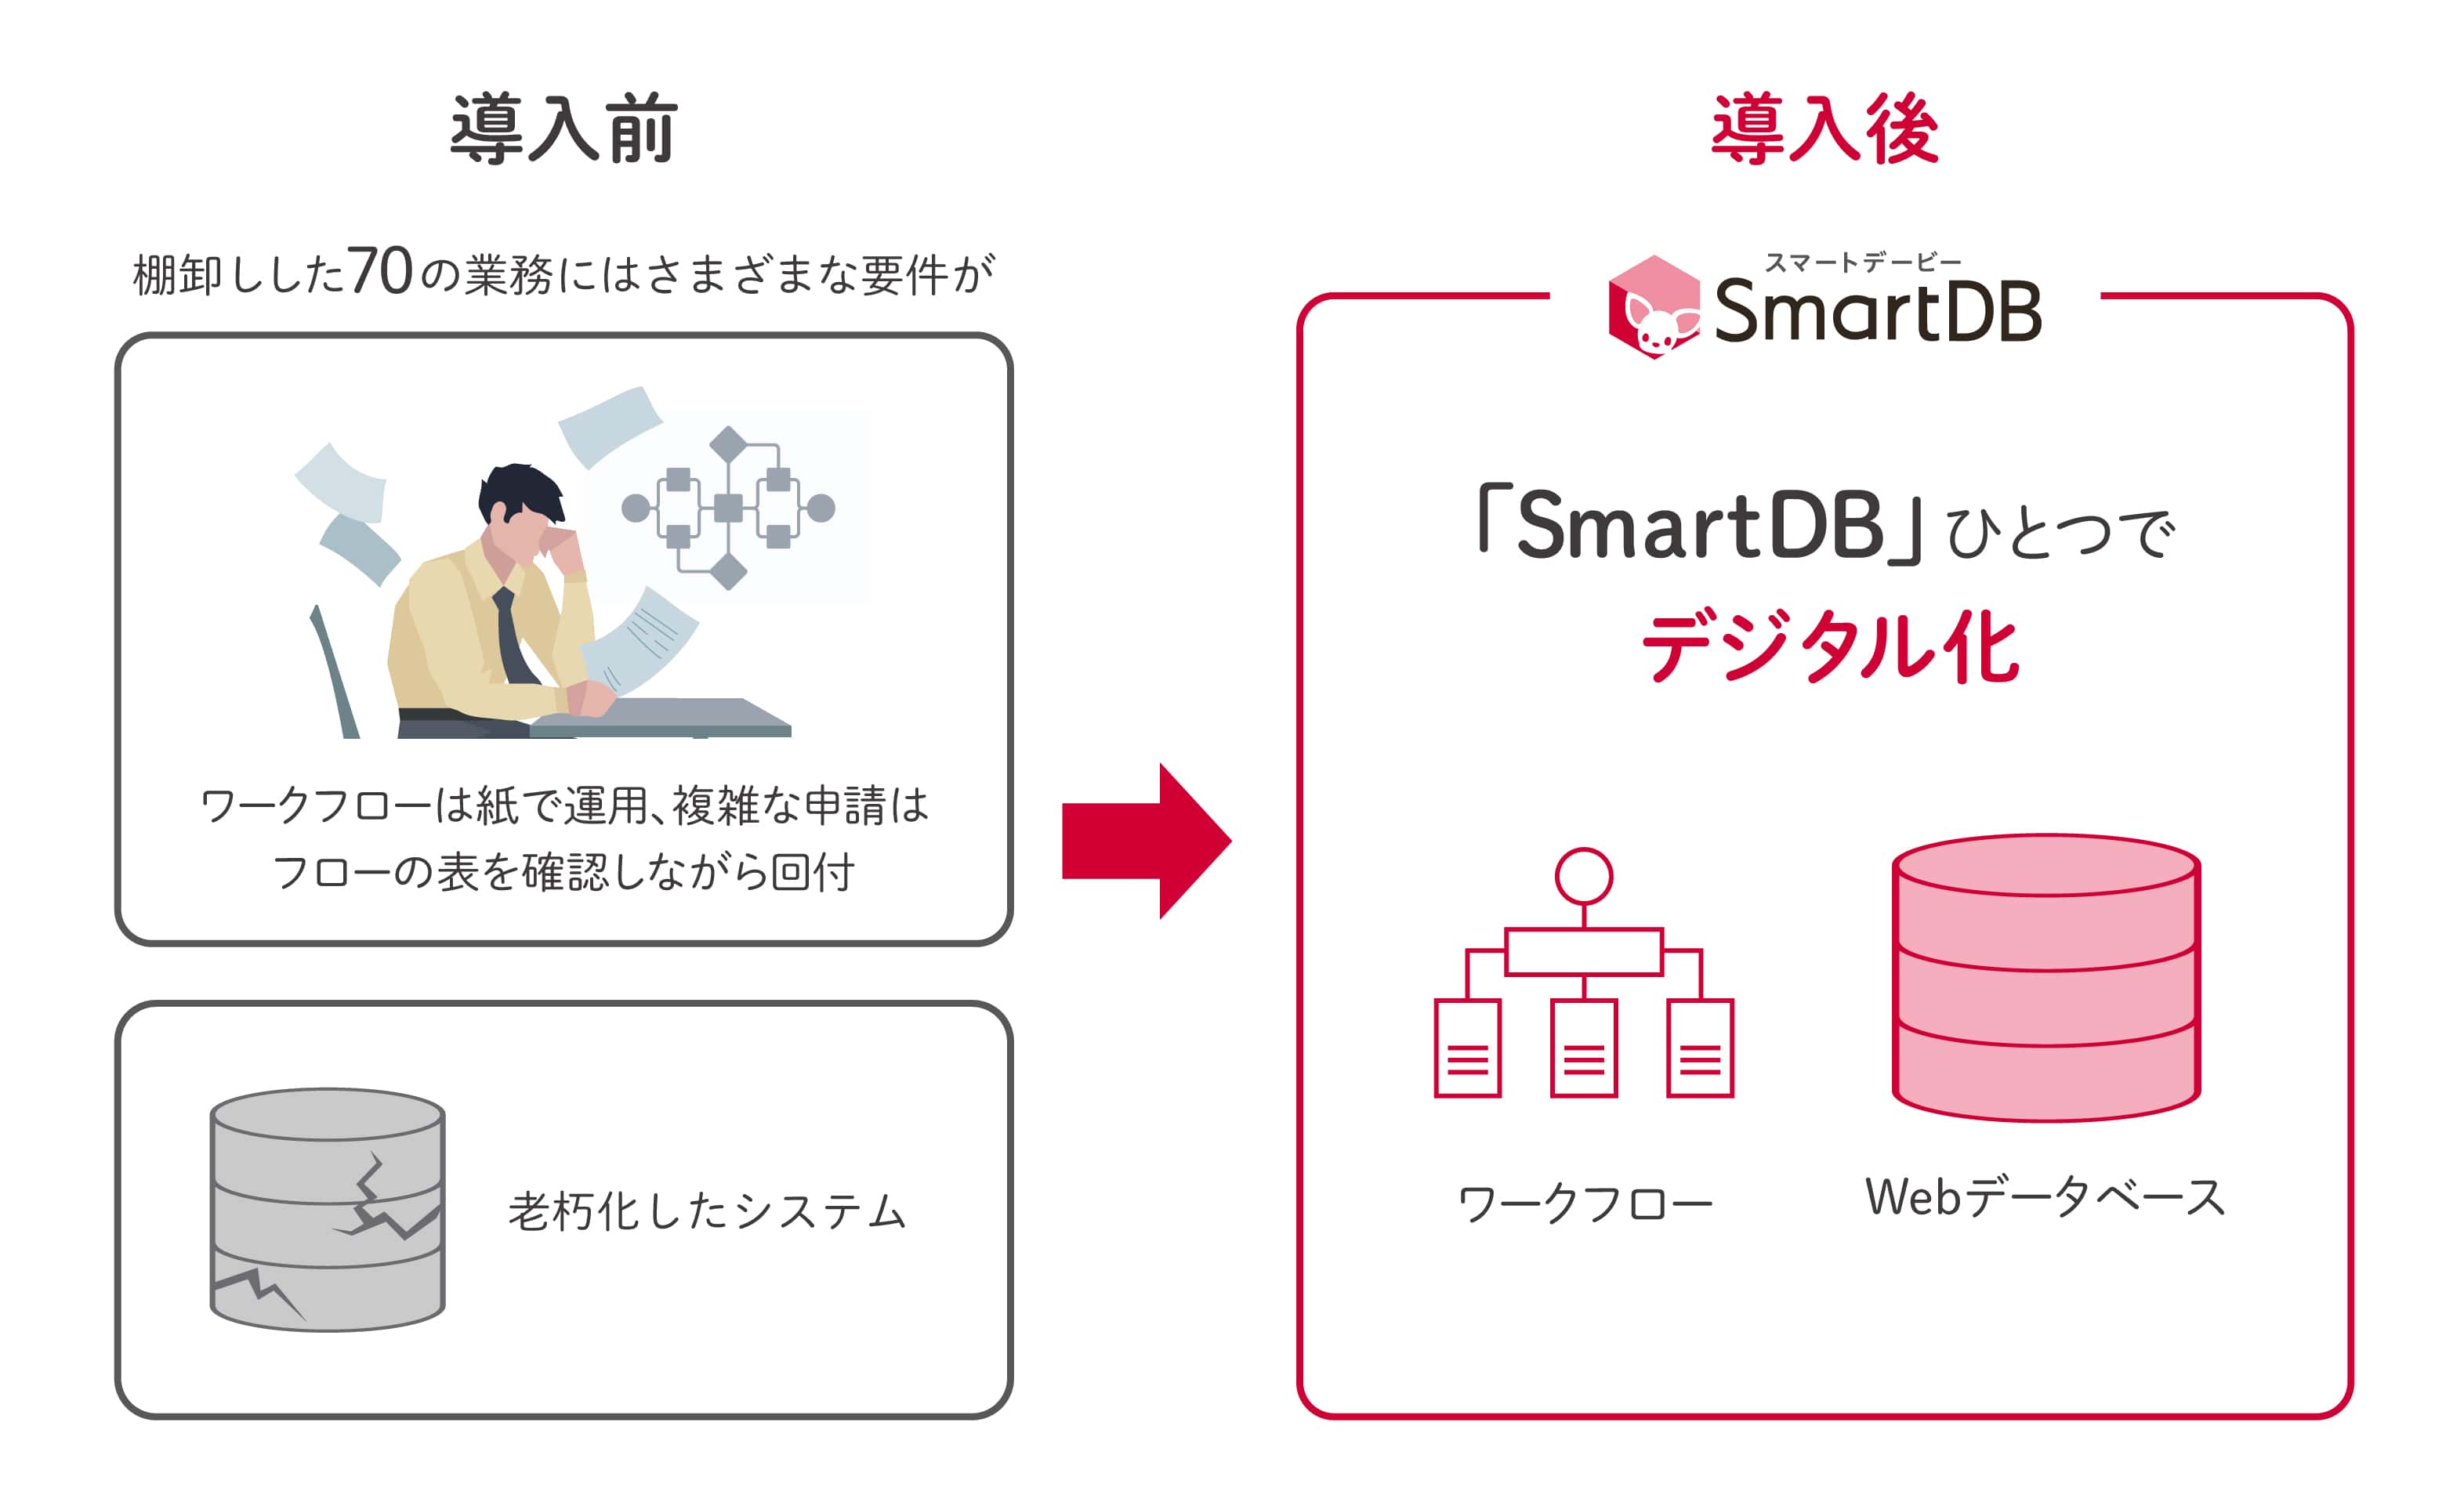 「SmartDB」で業務をデジタル化したイメージ